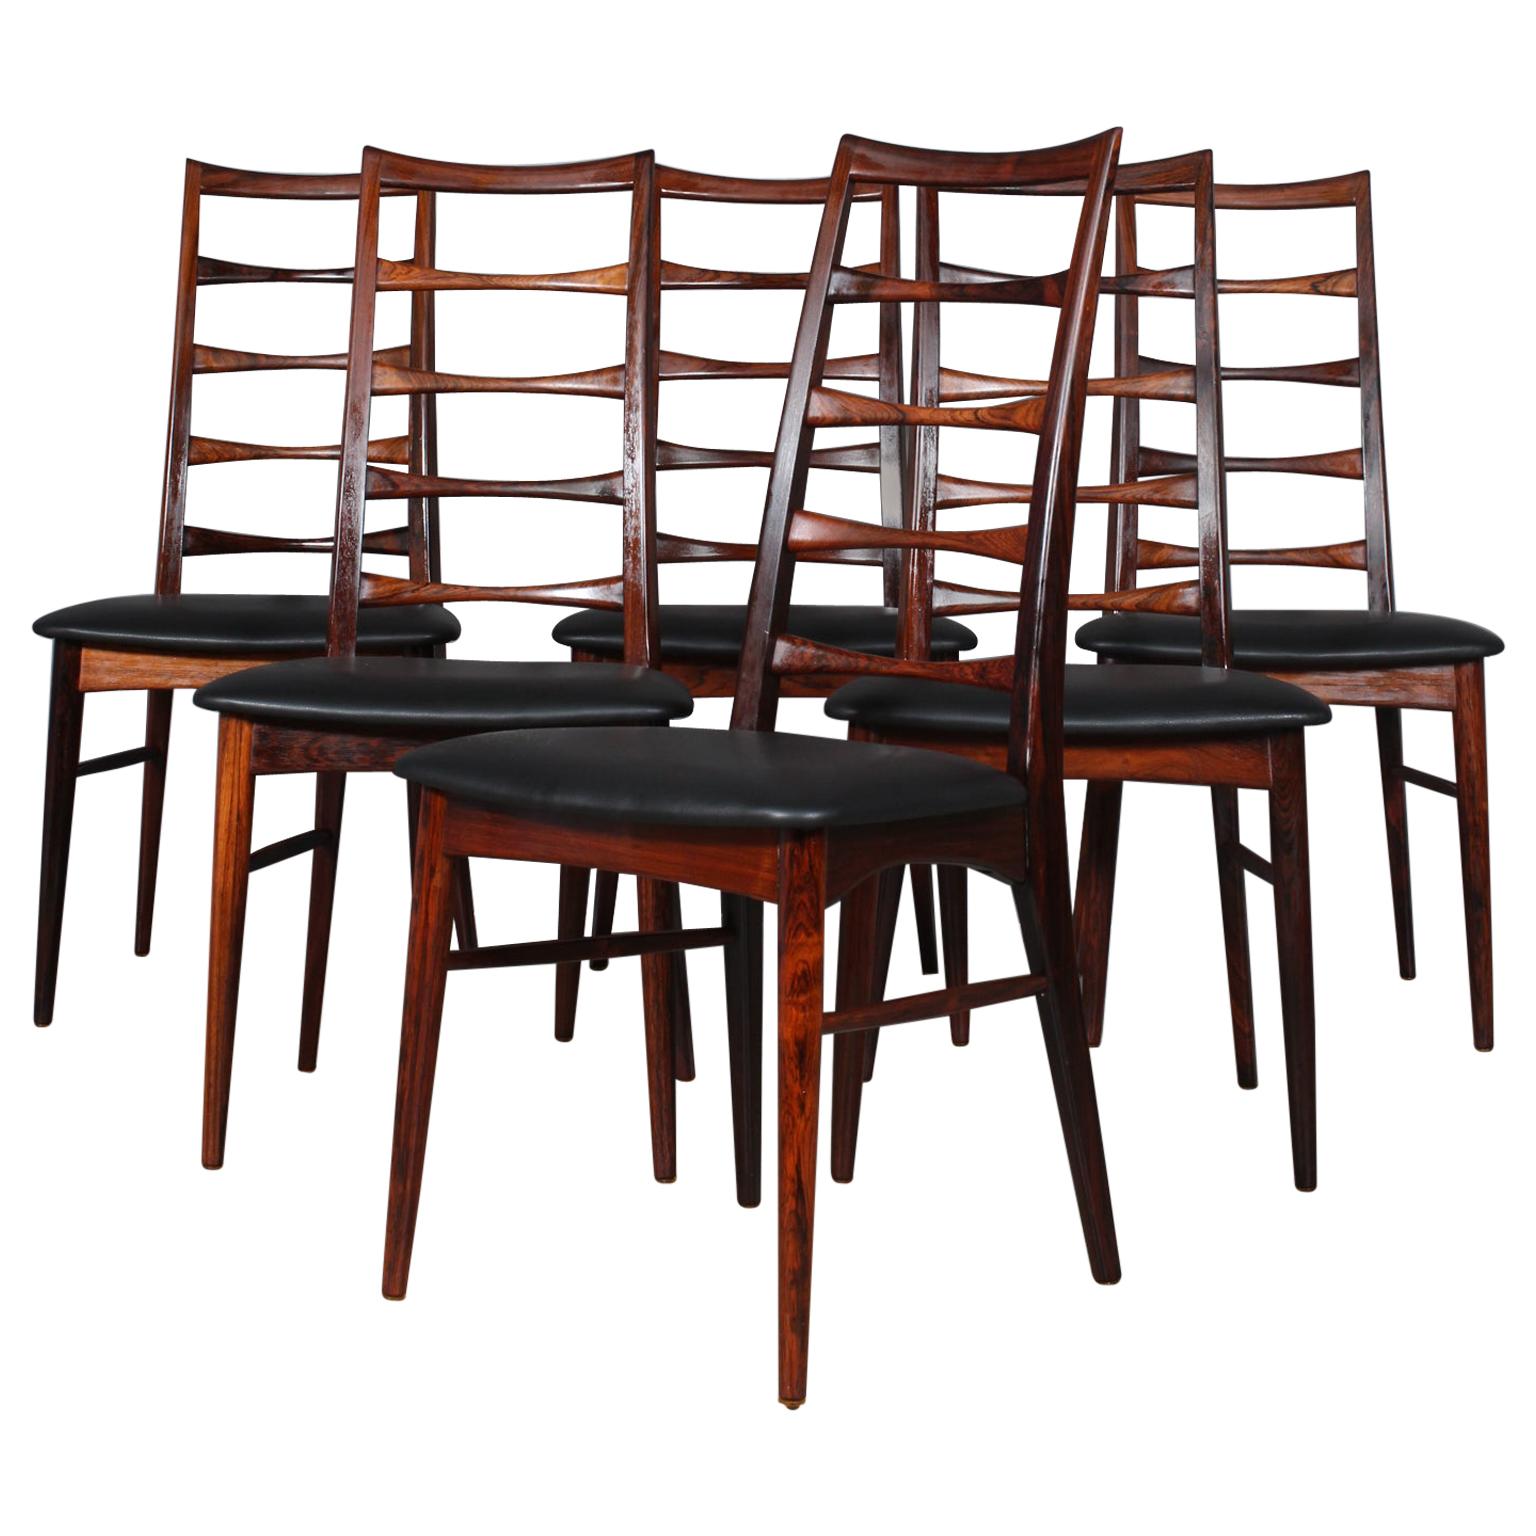 Set of Six Niels Koefoed Dining Chairs, Model "Lis", Rosewood, 1960s